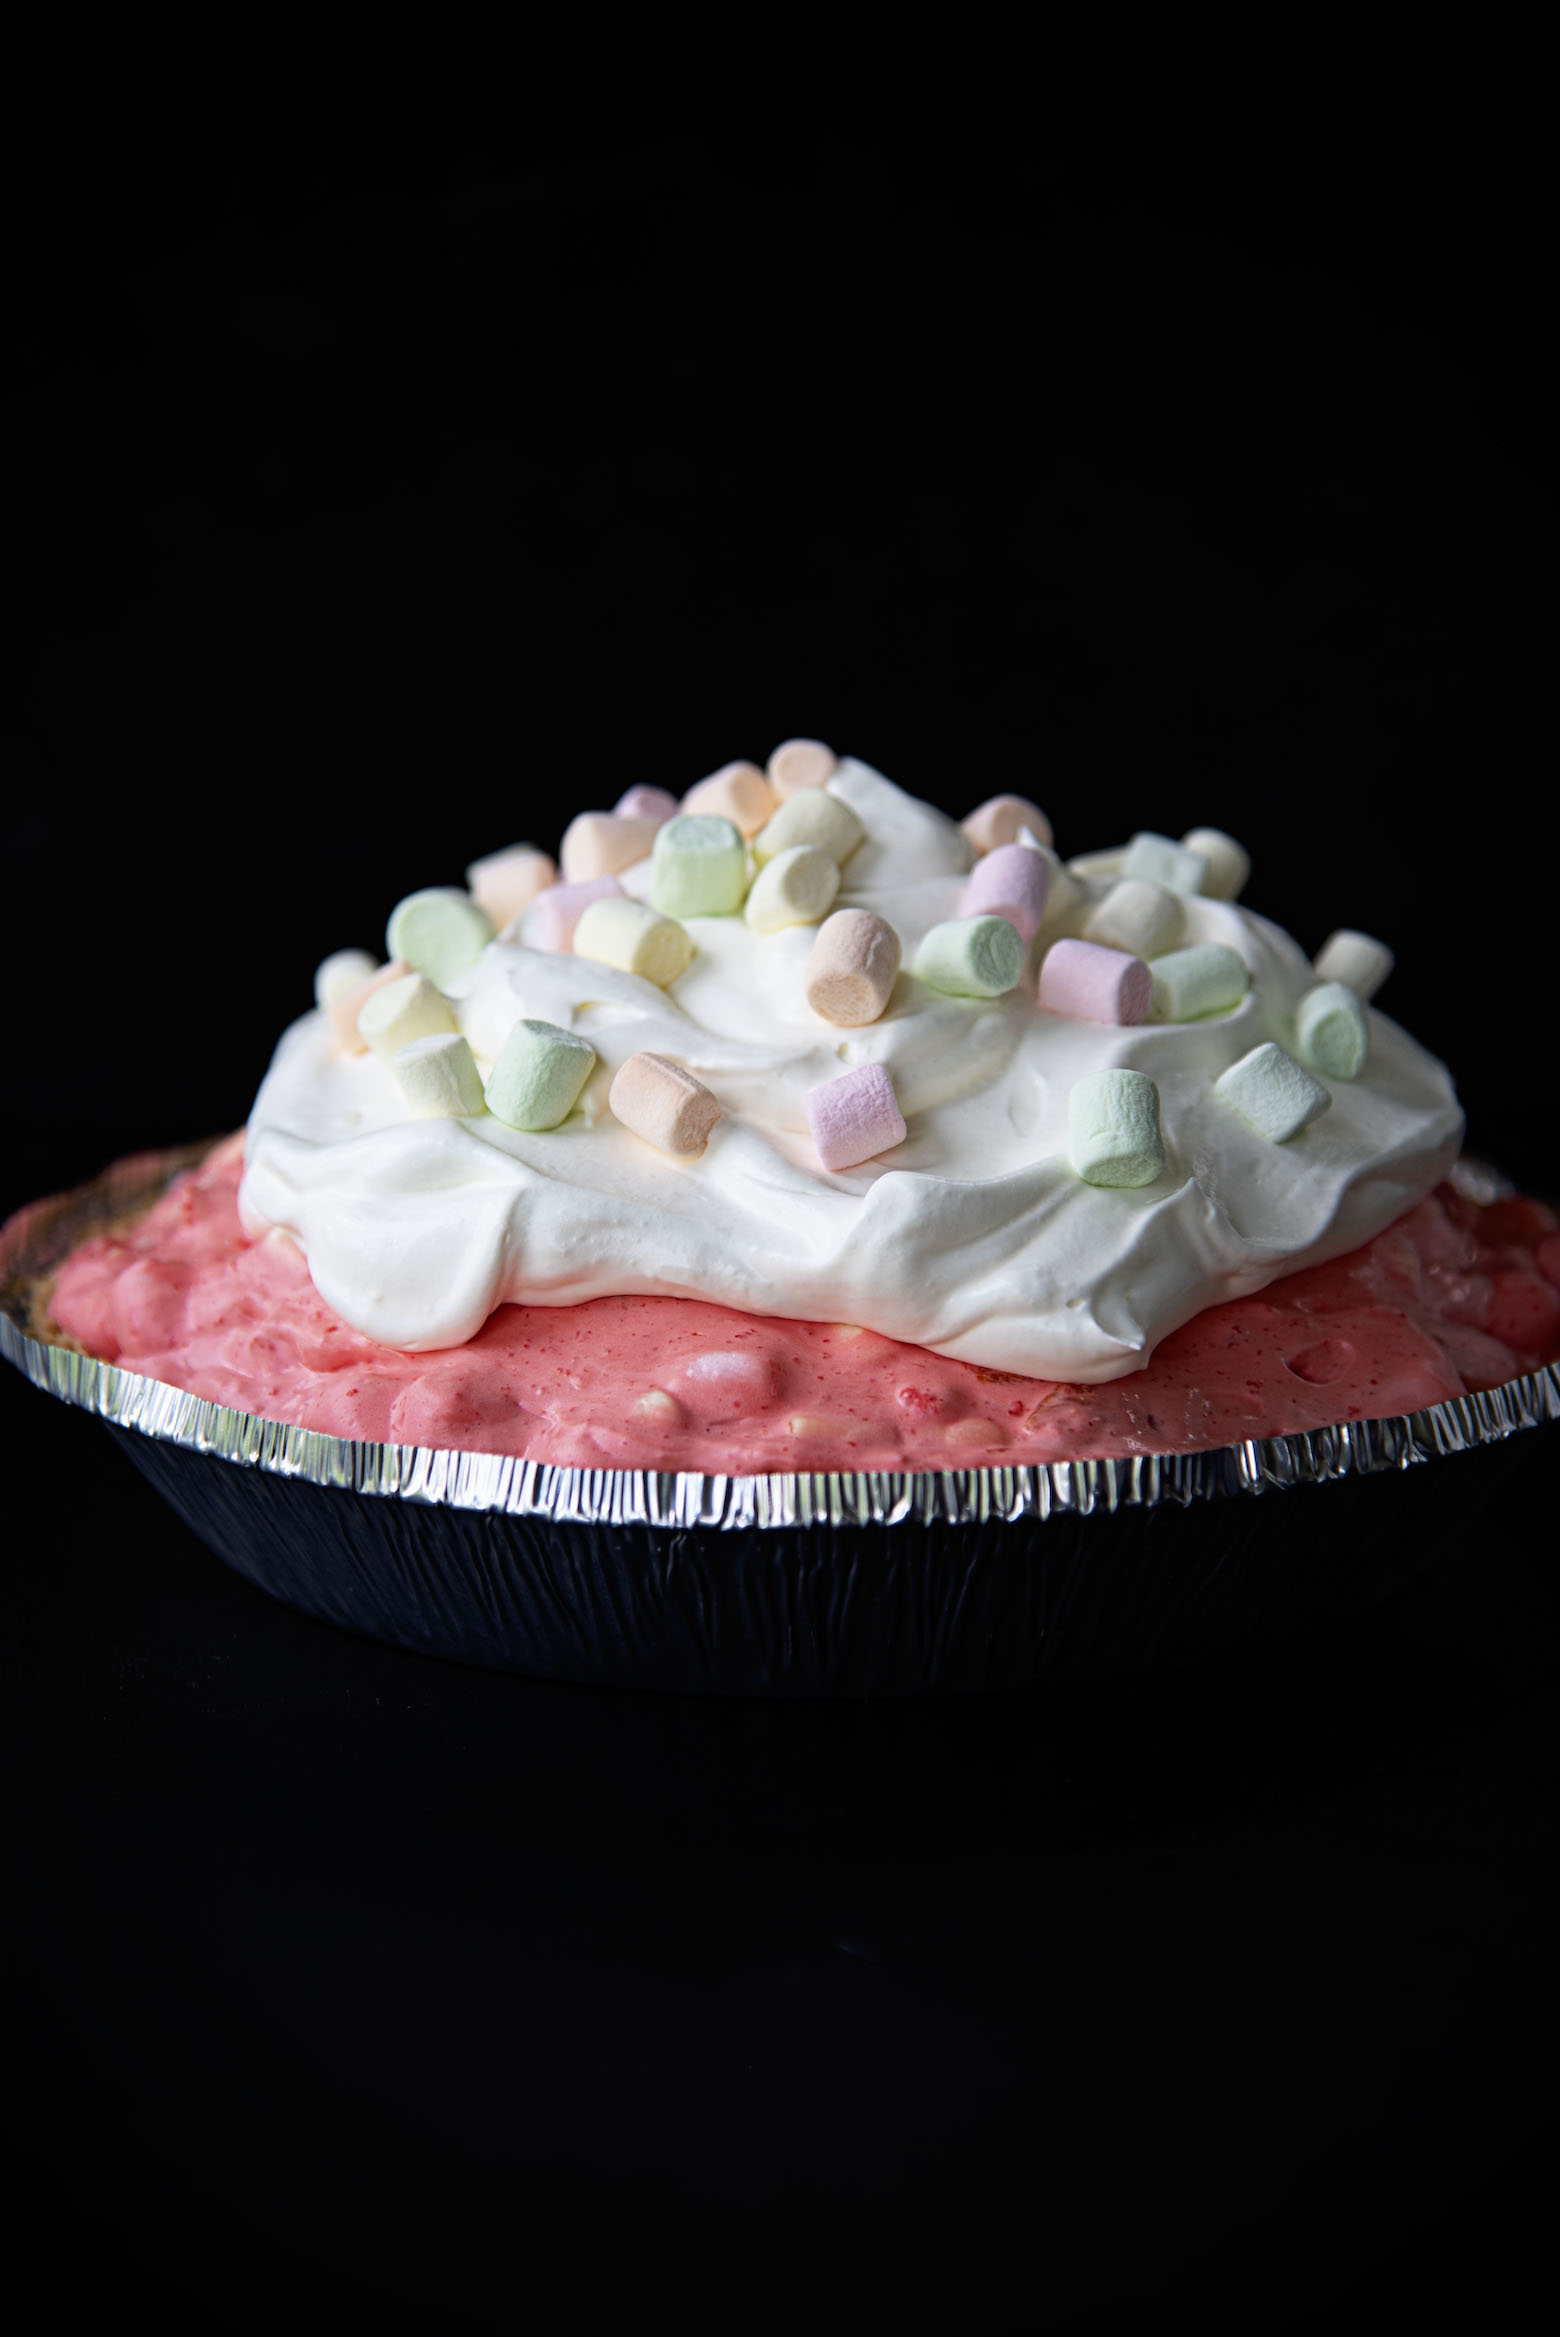 Side view of Fruity Marshmallow Raspberry Jello Pie with dark background.